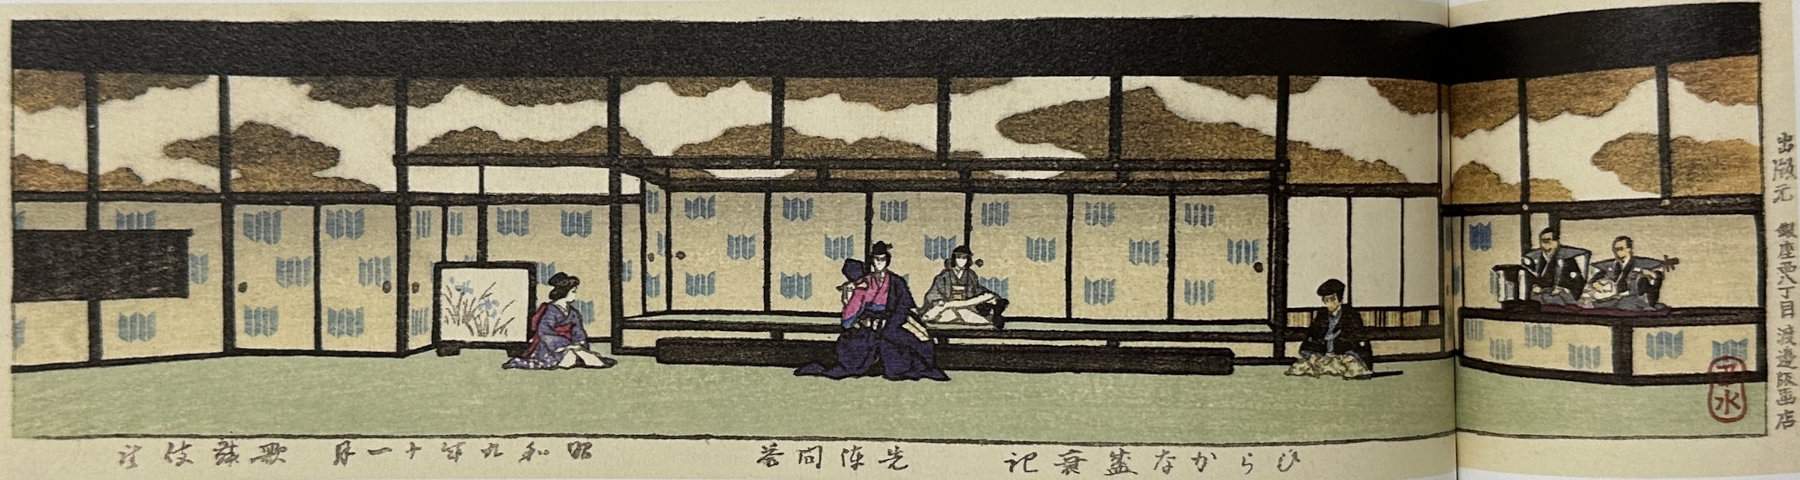 The Kabuki play Hirakana Seisuiki - Kawase Hasui Catalogue woodblock print